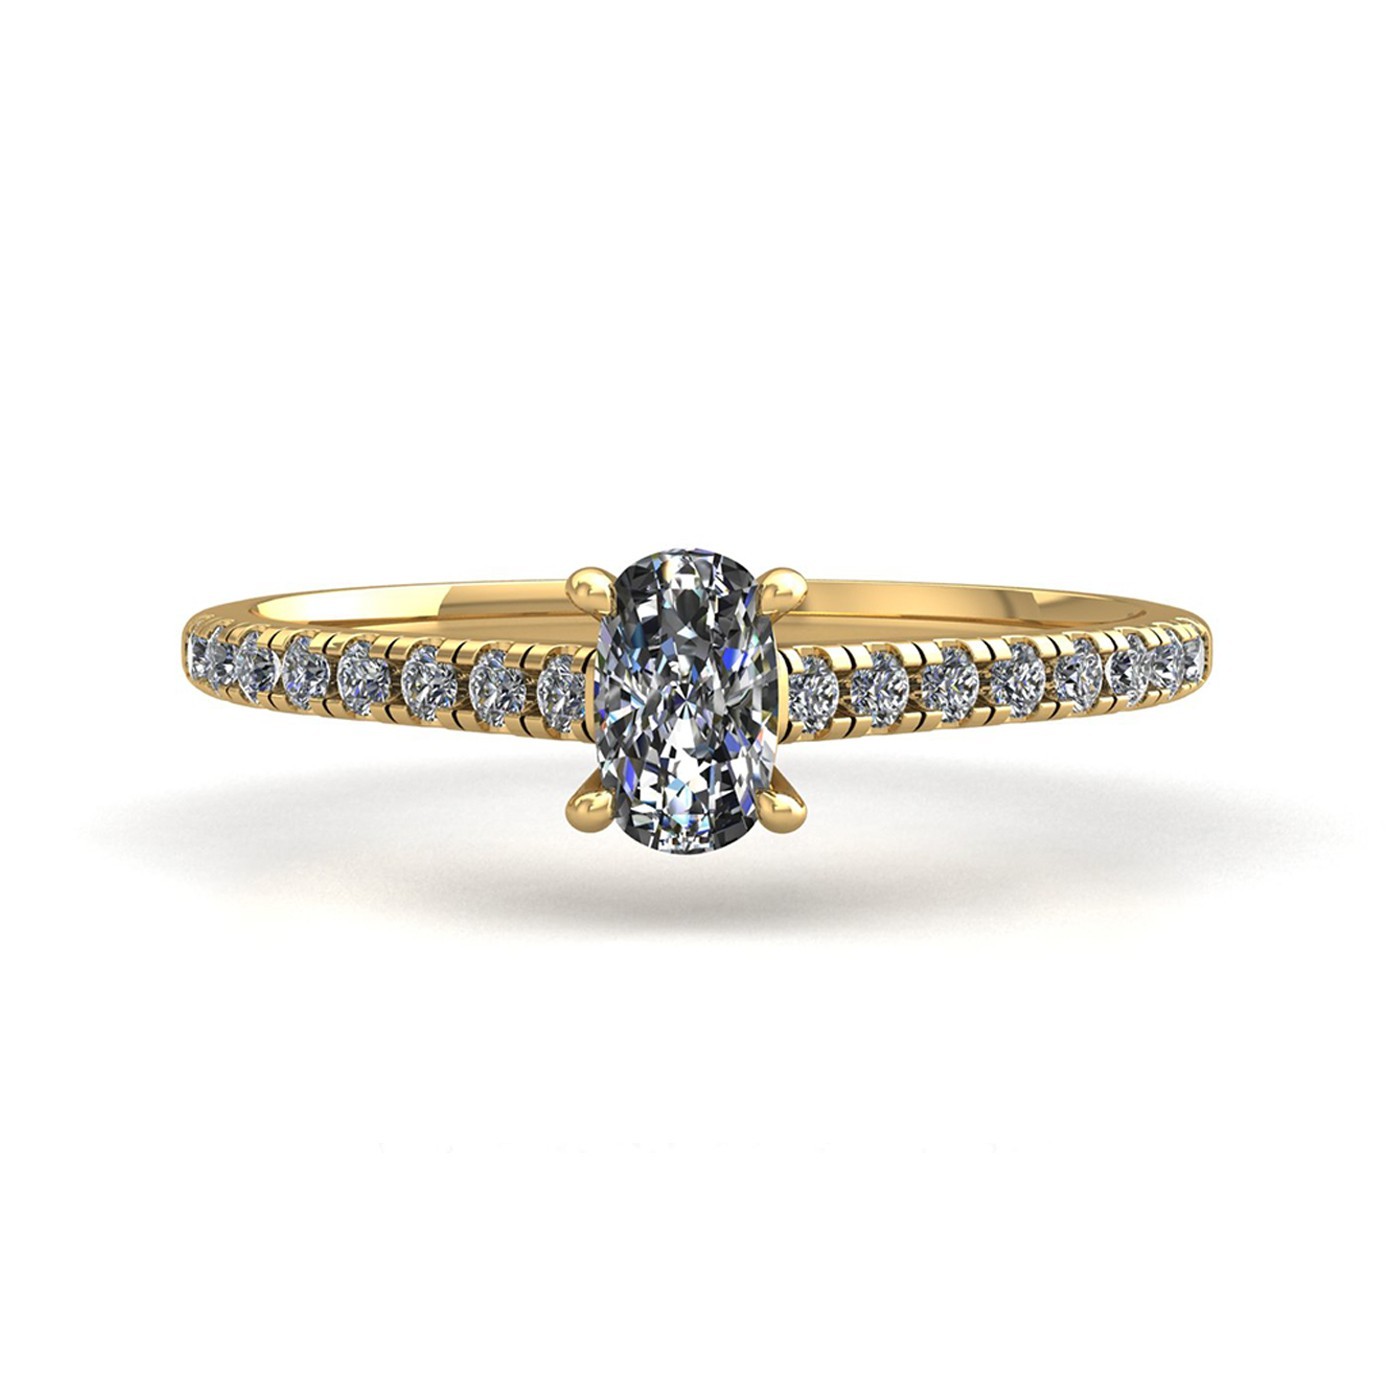 18k yellow gold  4 prongs elongated cushion cut diamond engagement ring with whisper thin pavÉ set band